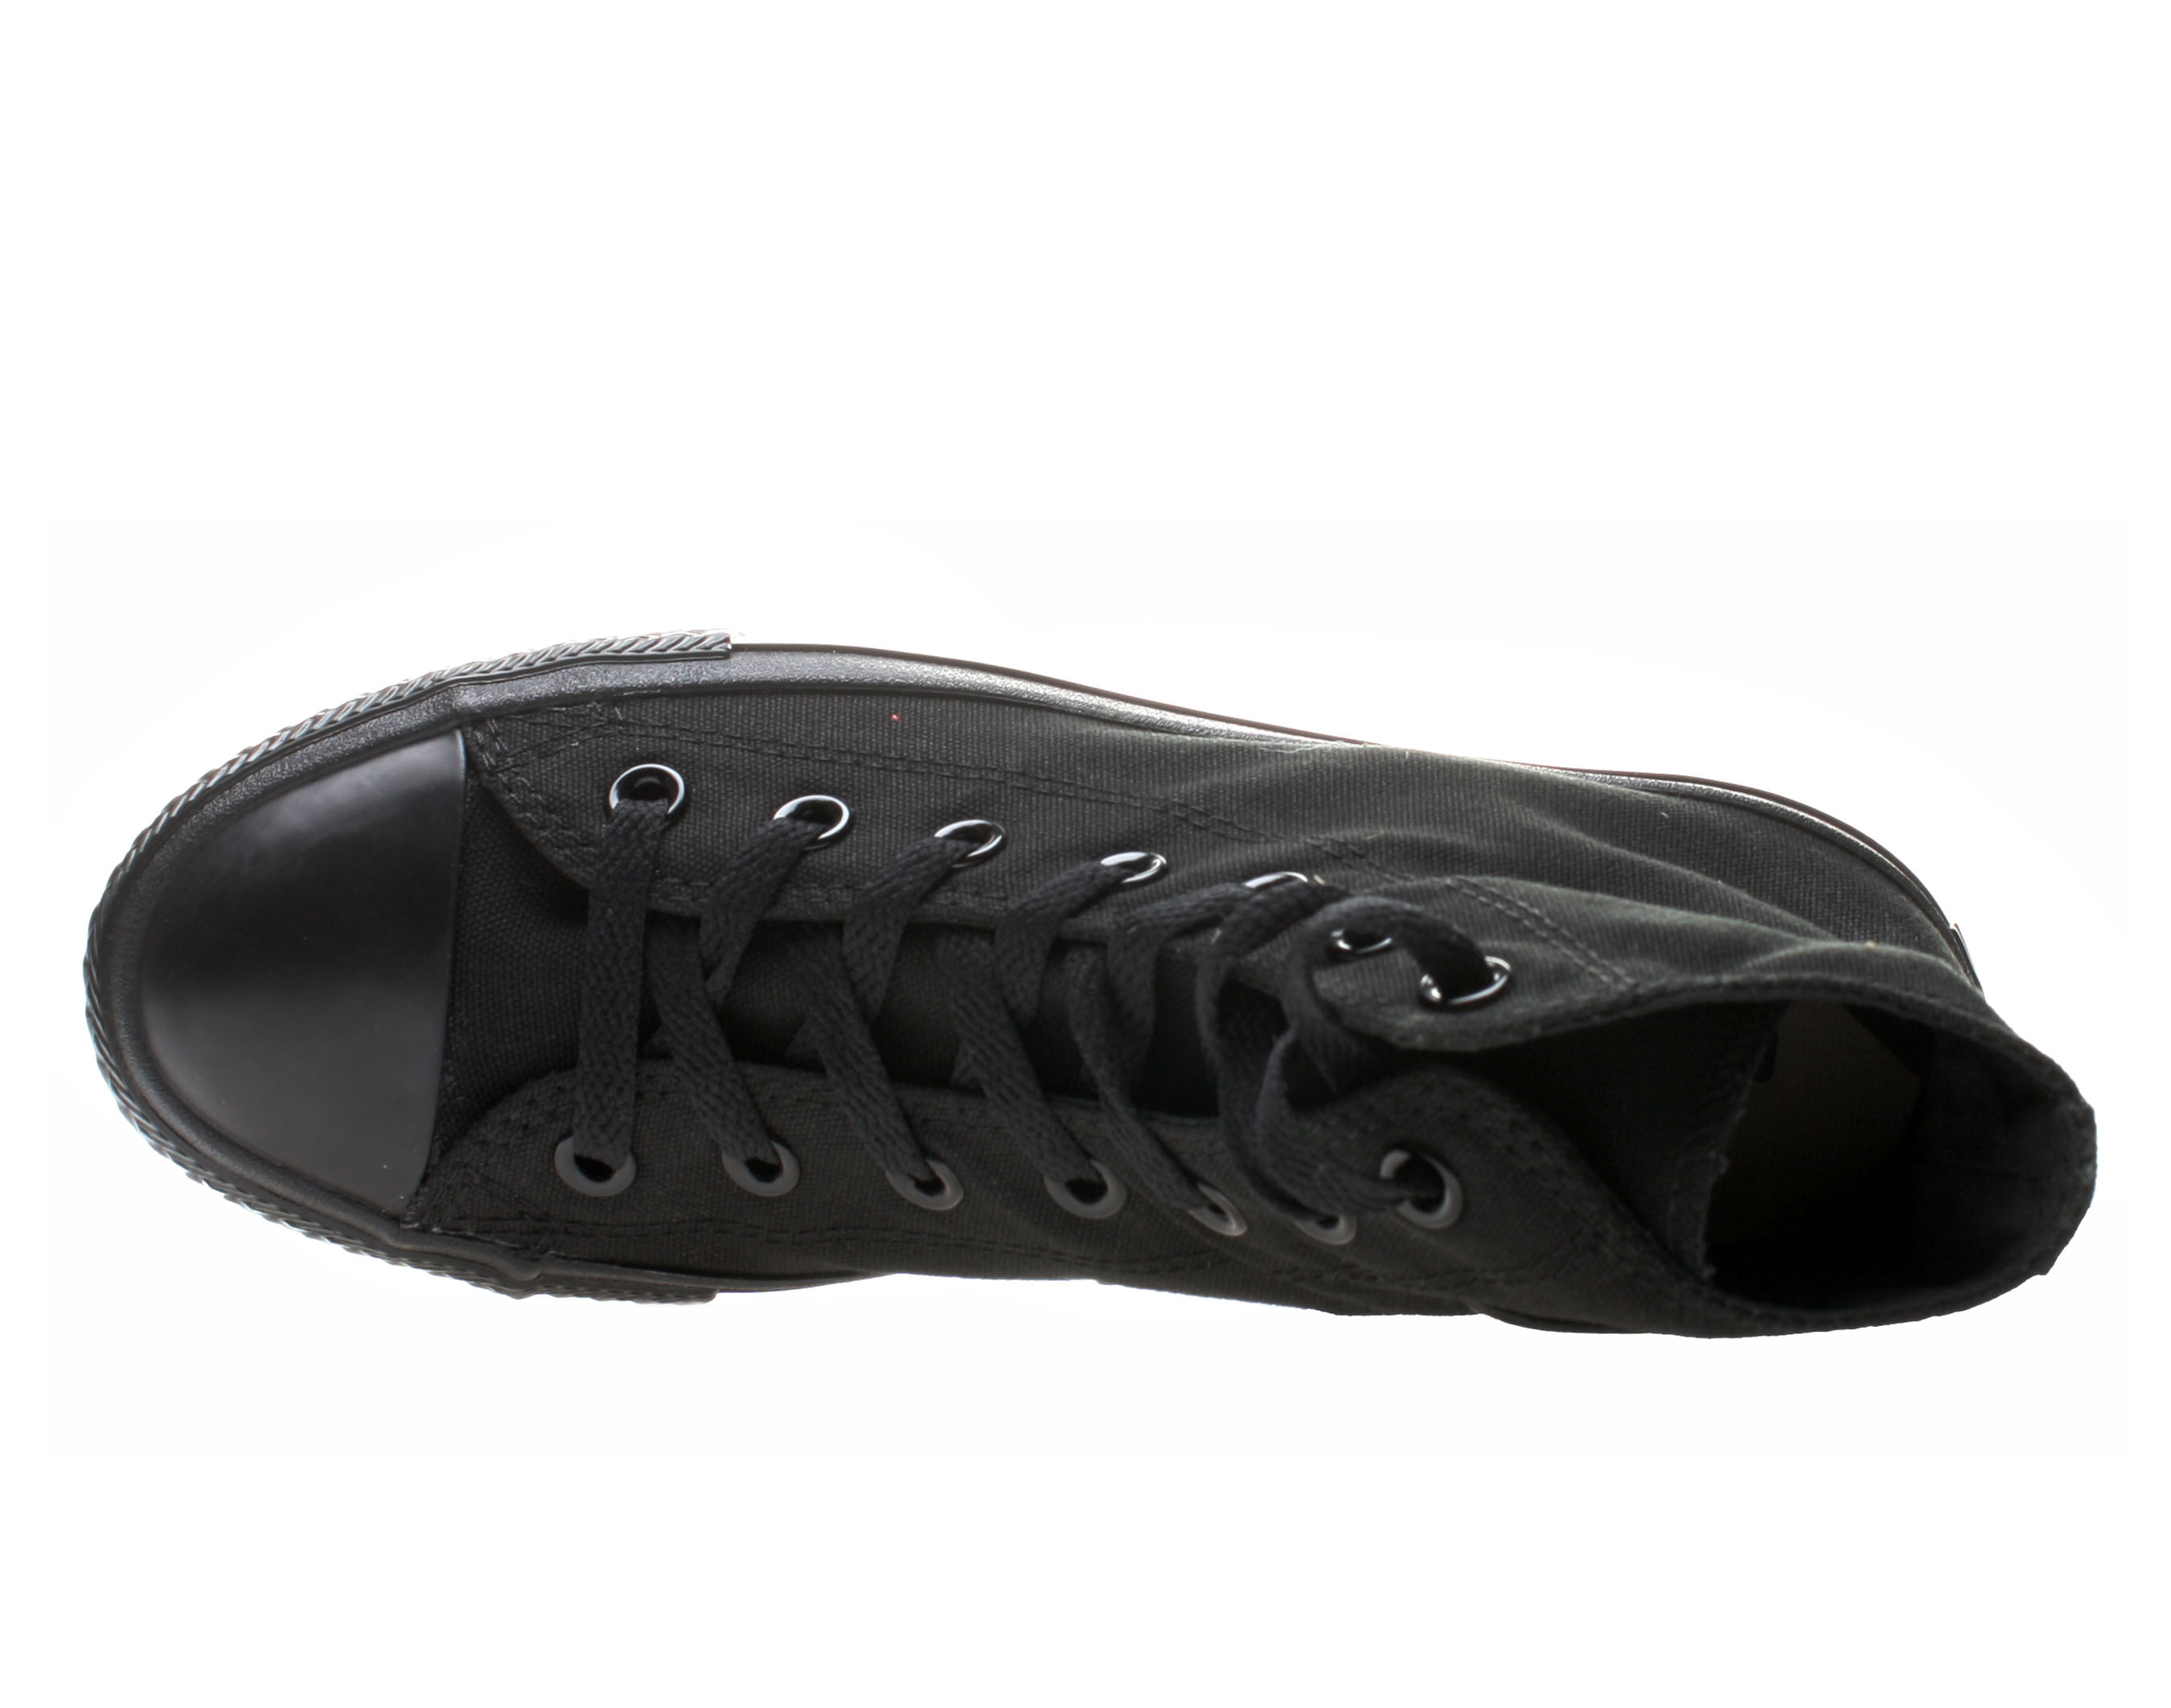 CONVERSE All Star Black Mono Low Top Chuck Taylor Men Women Shoes Sneaker - image 4 of 6